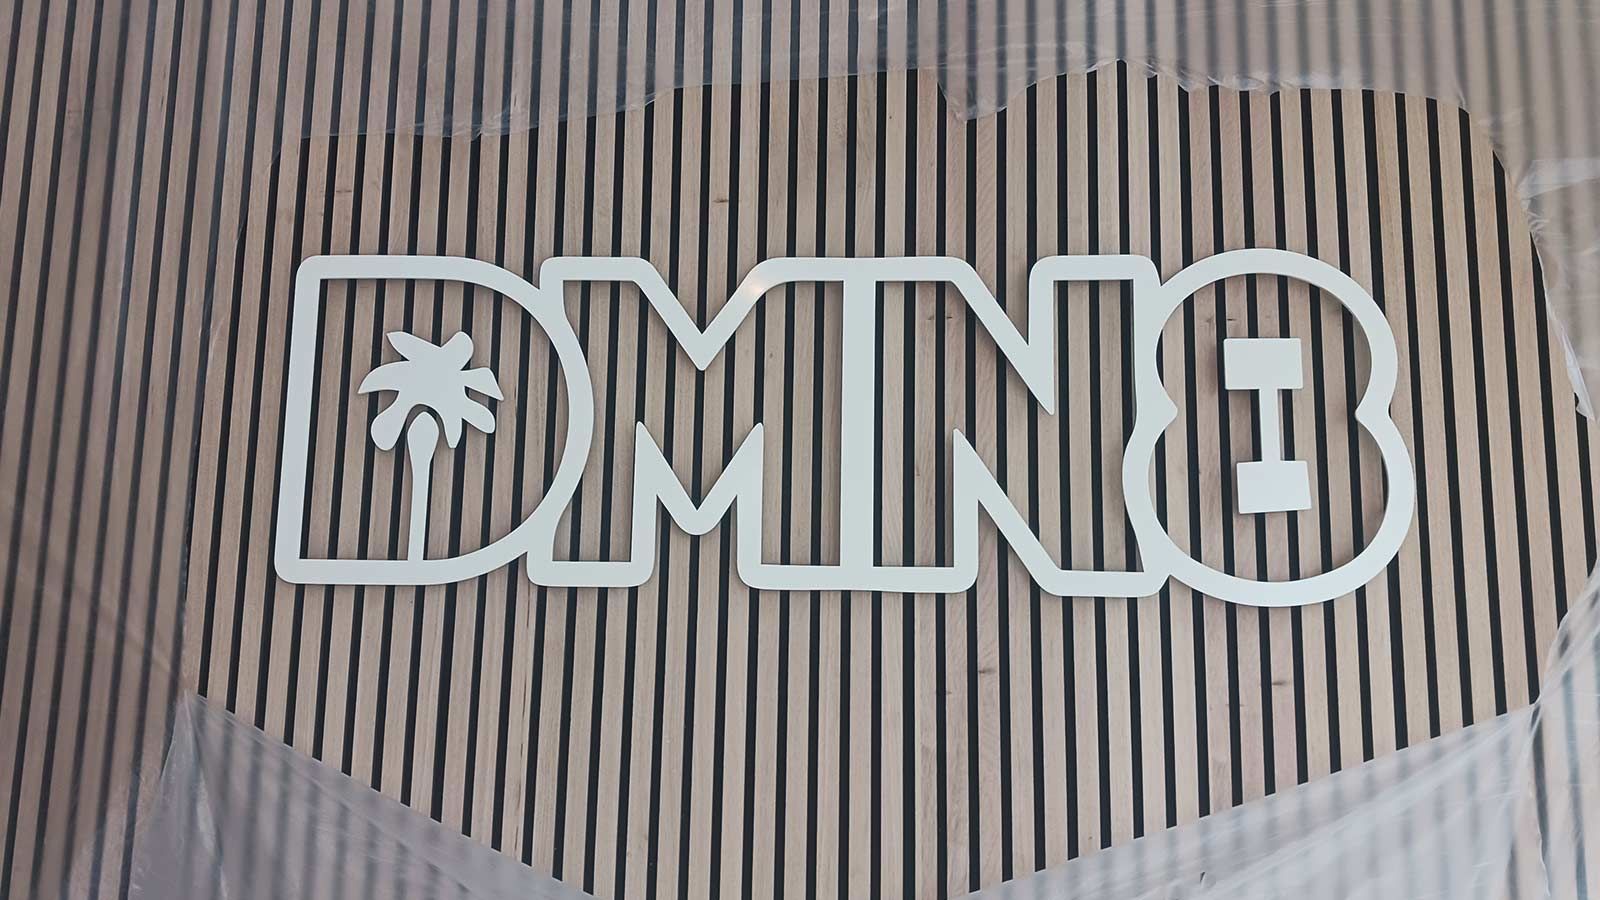 DMN8 interior 3D logo sign made of aluminum